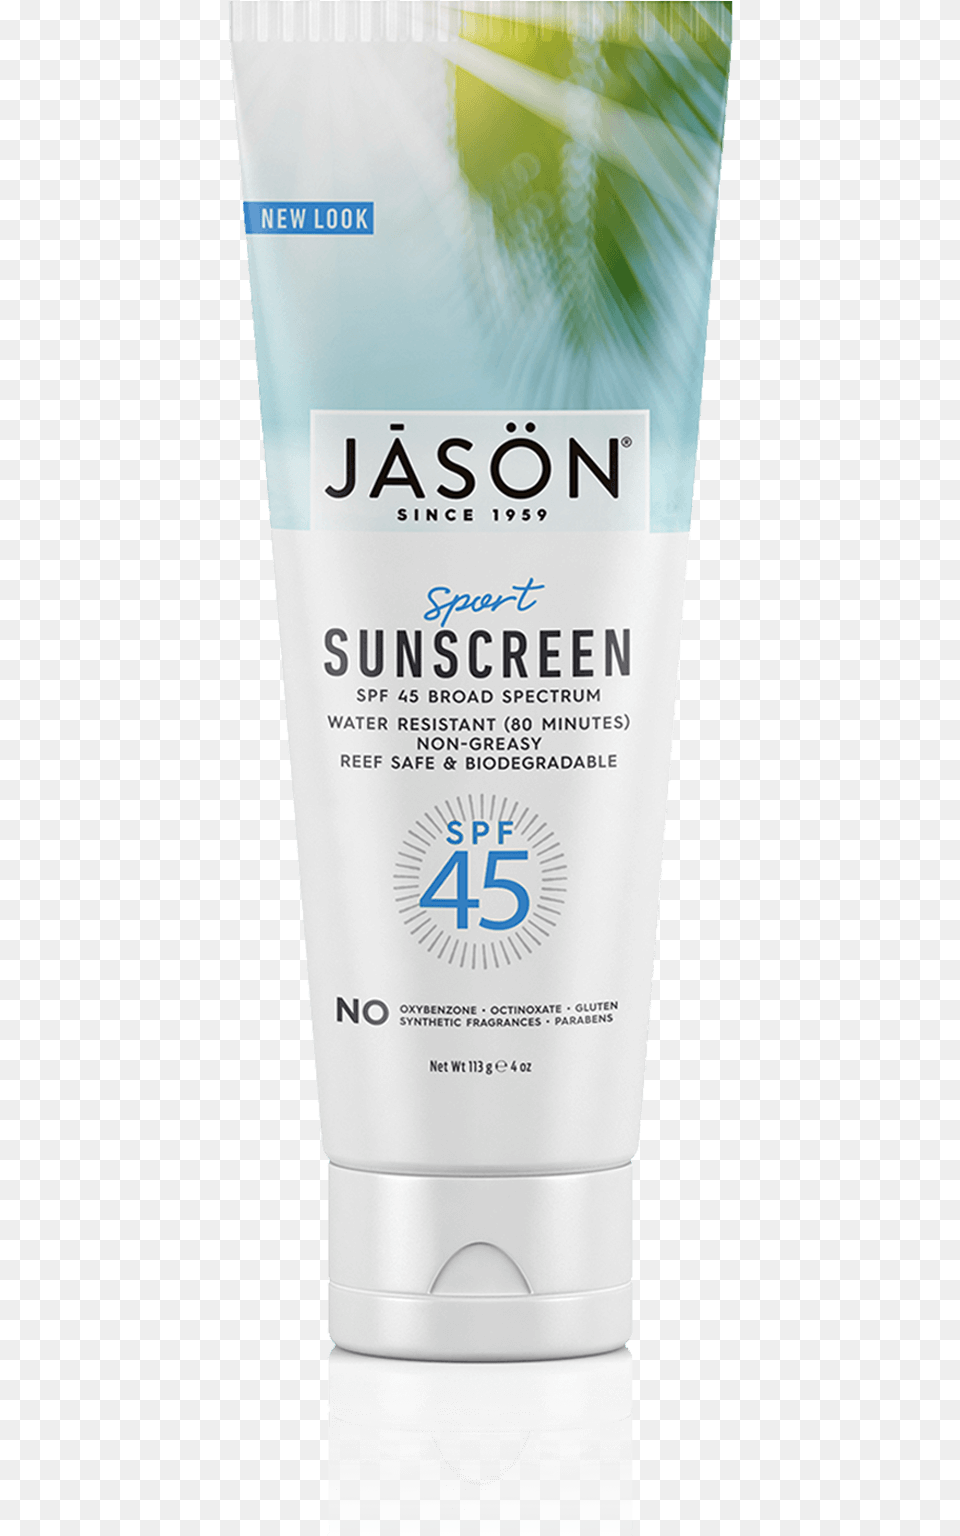 Jason Sunscreen, Bottle, Cosmetics Png